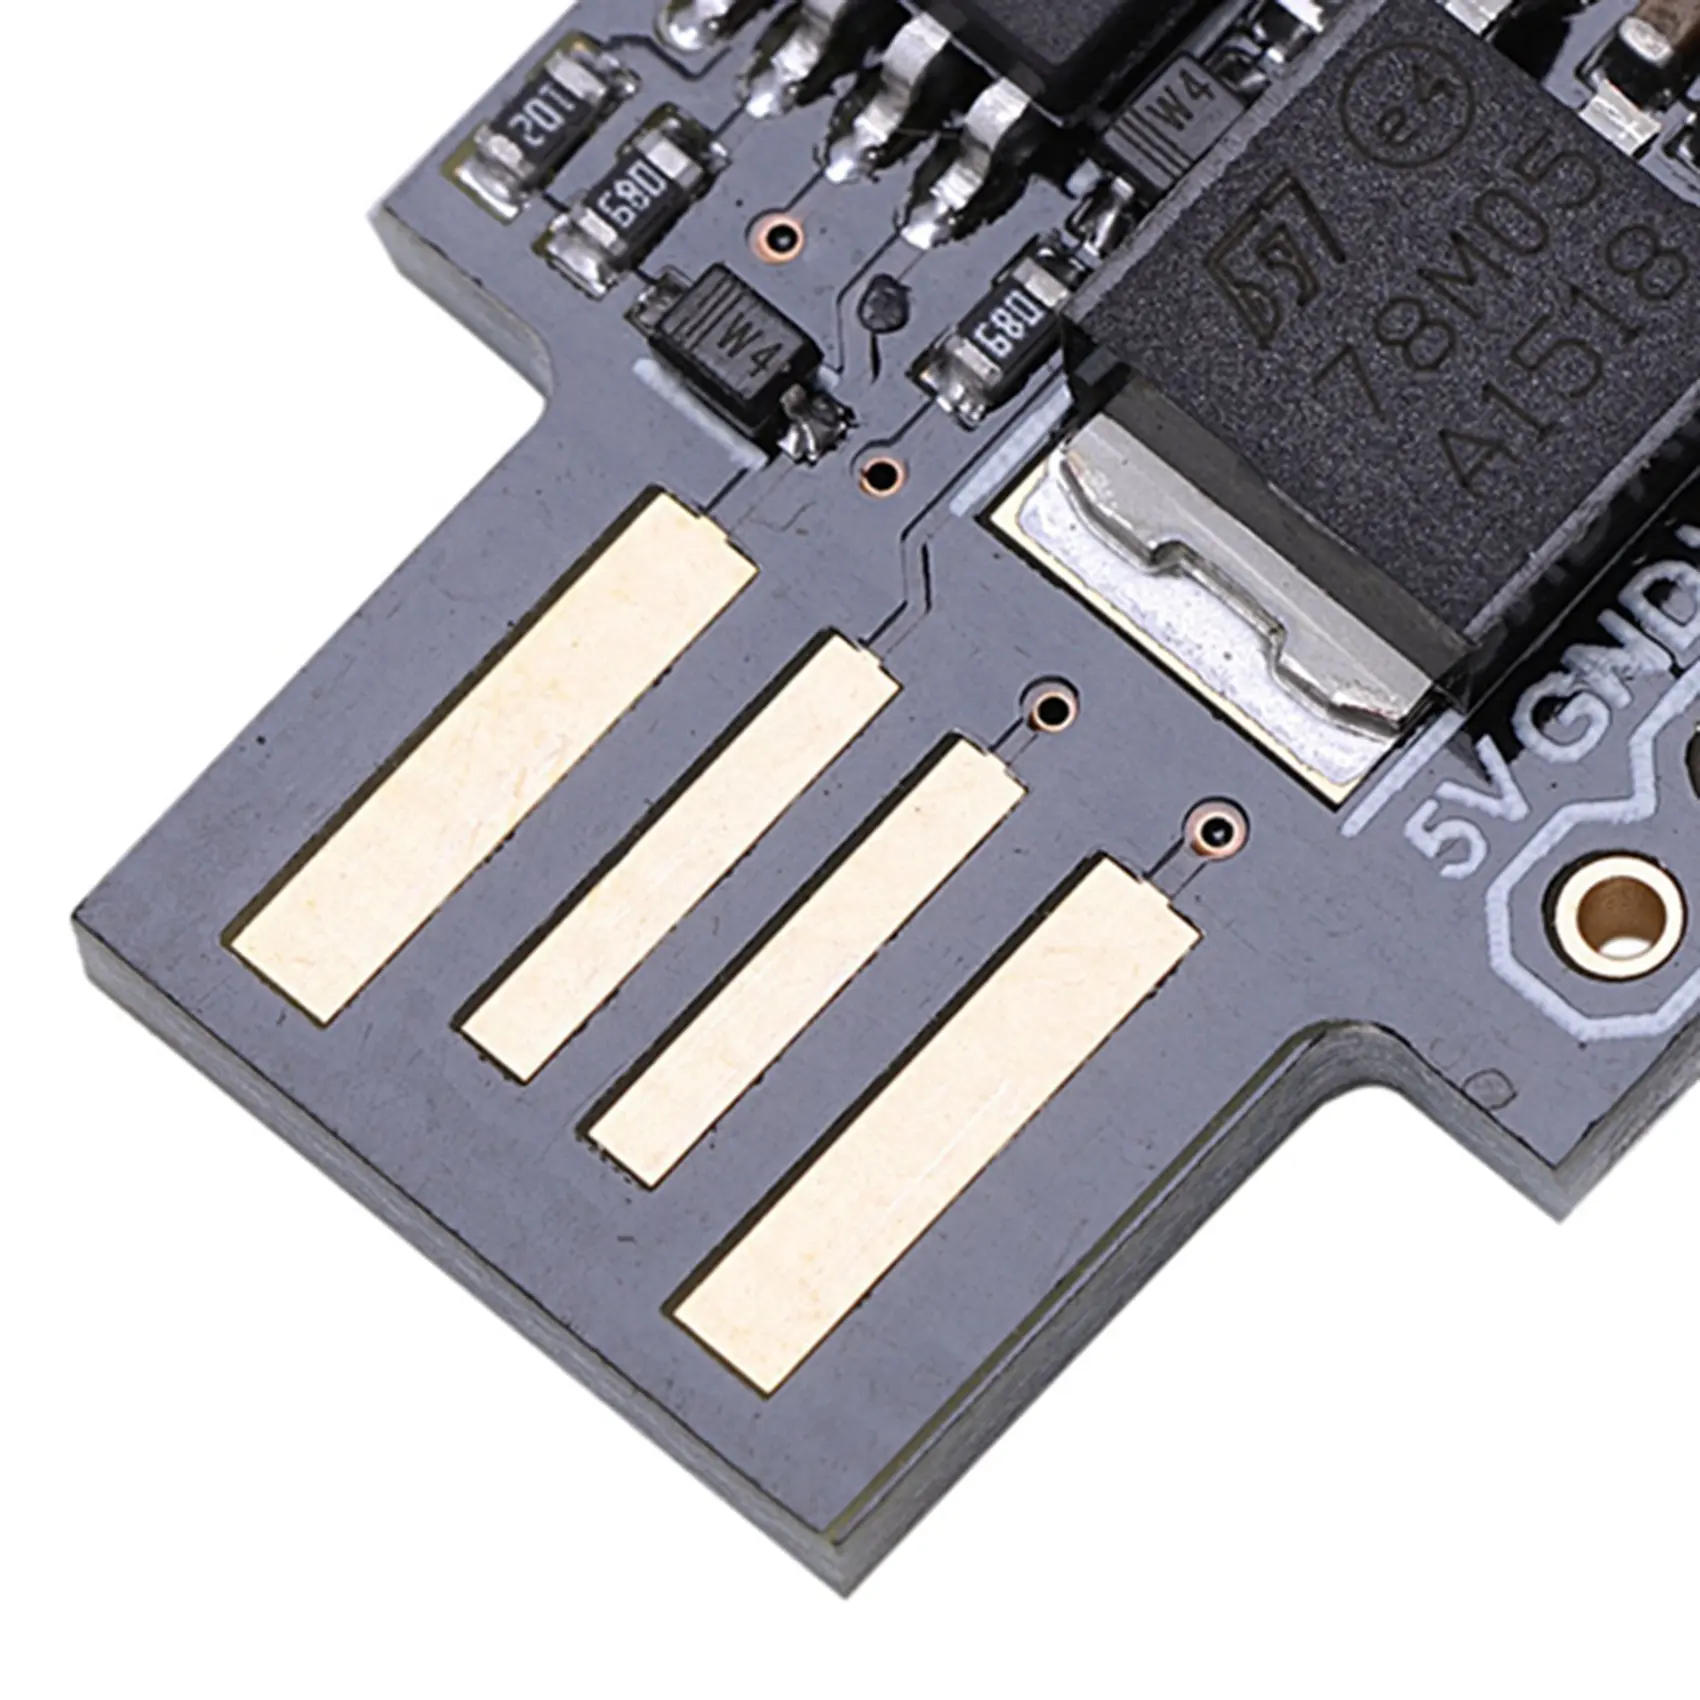 ATtiny85 USB for Arduino Compatible Development Board images - 6